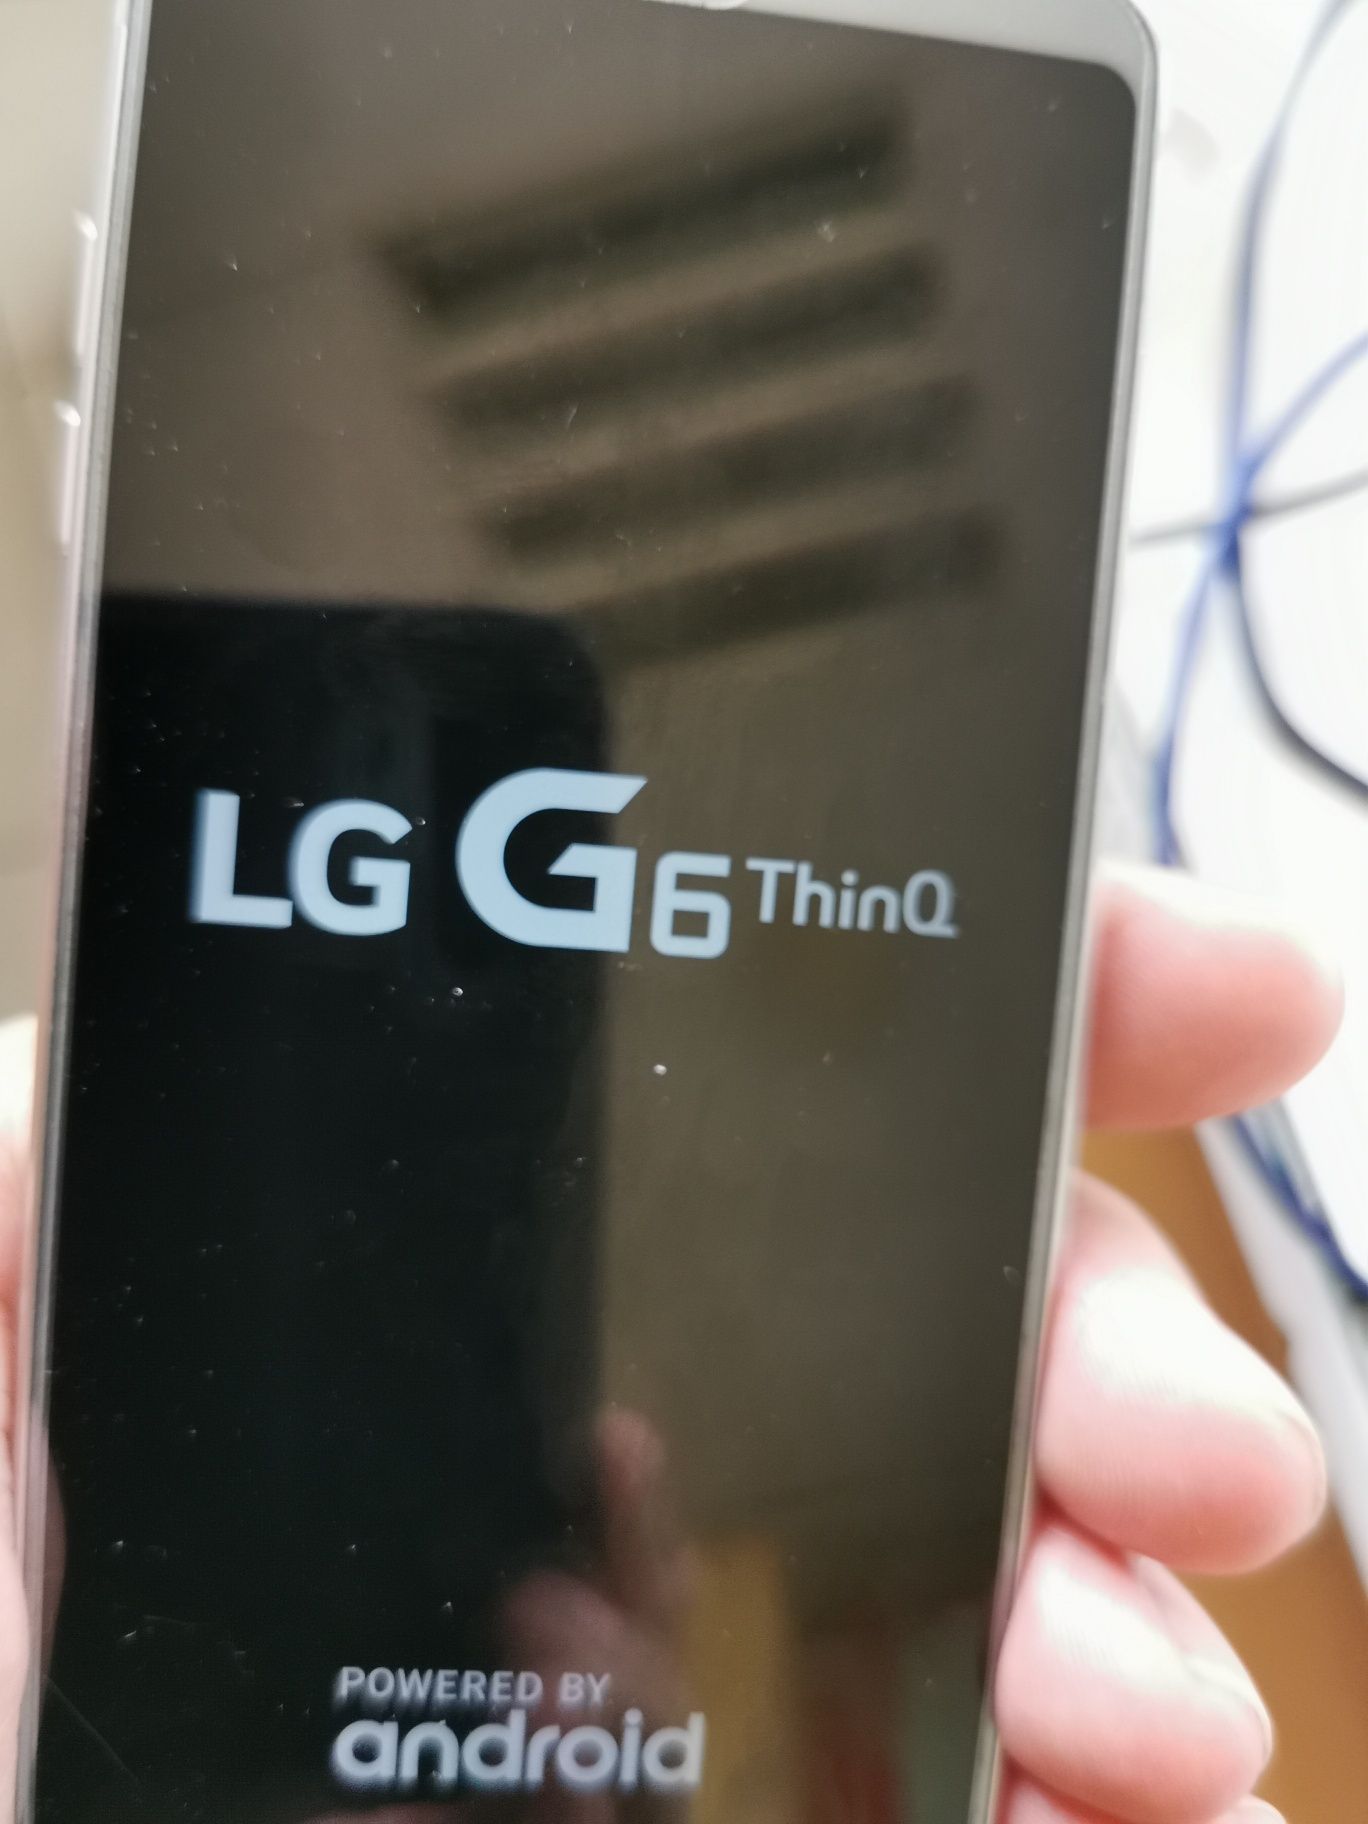 Sprzedam smartfon LG G6 thinq